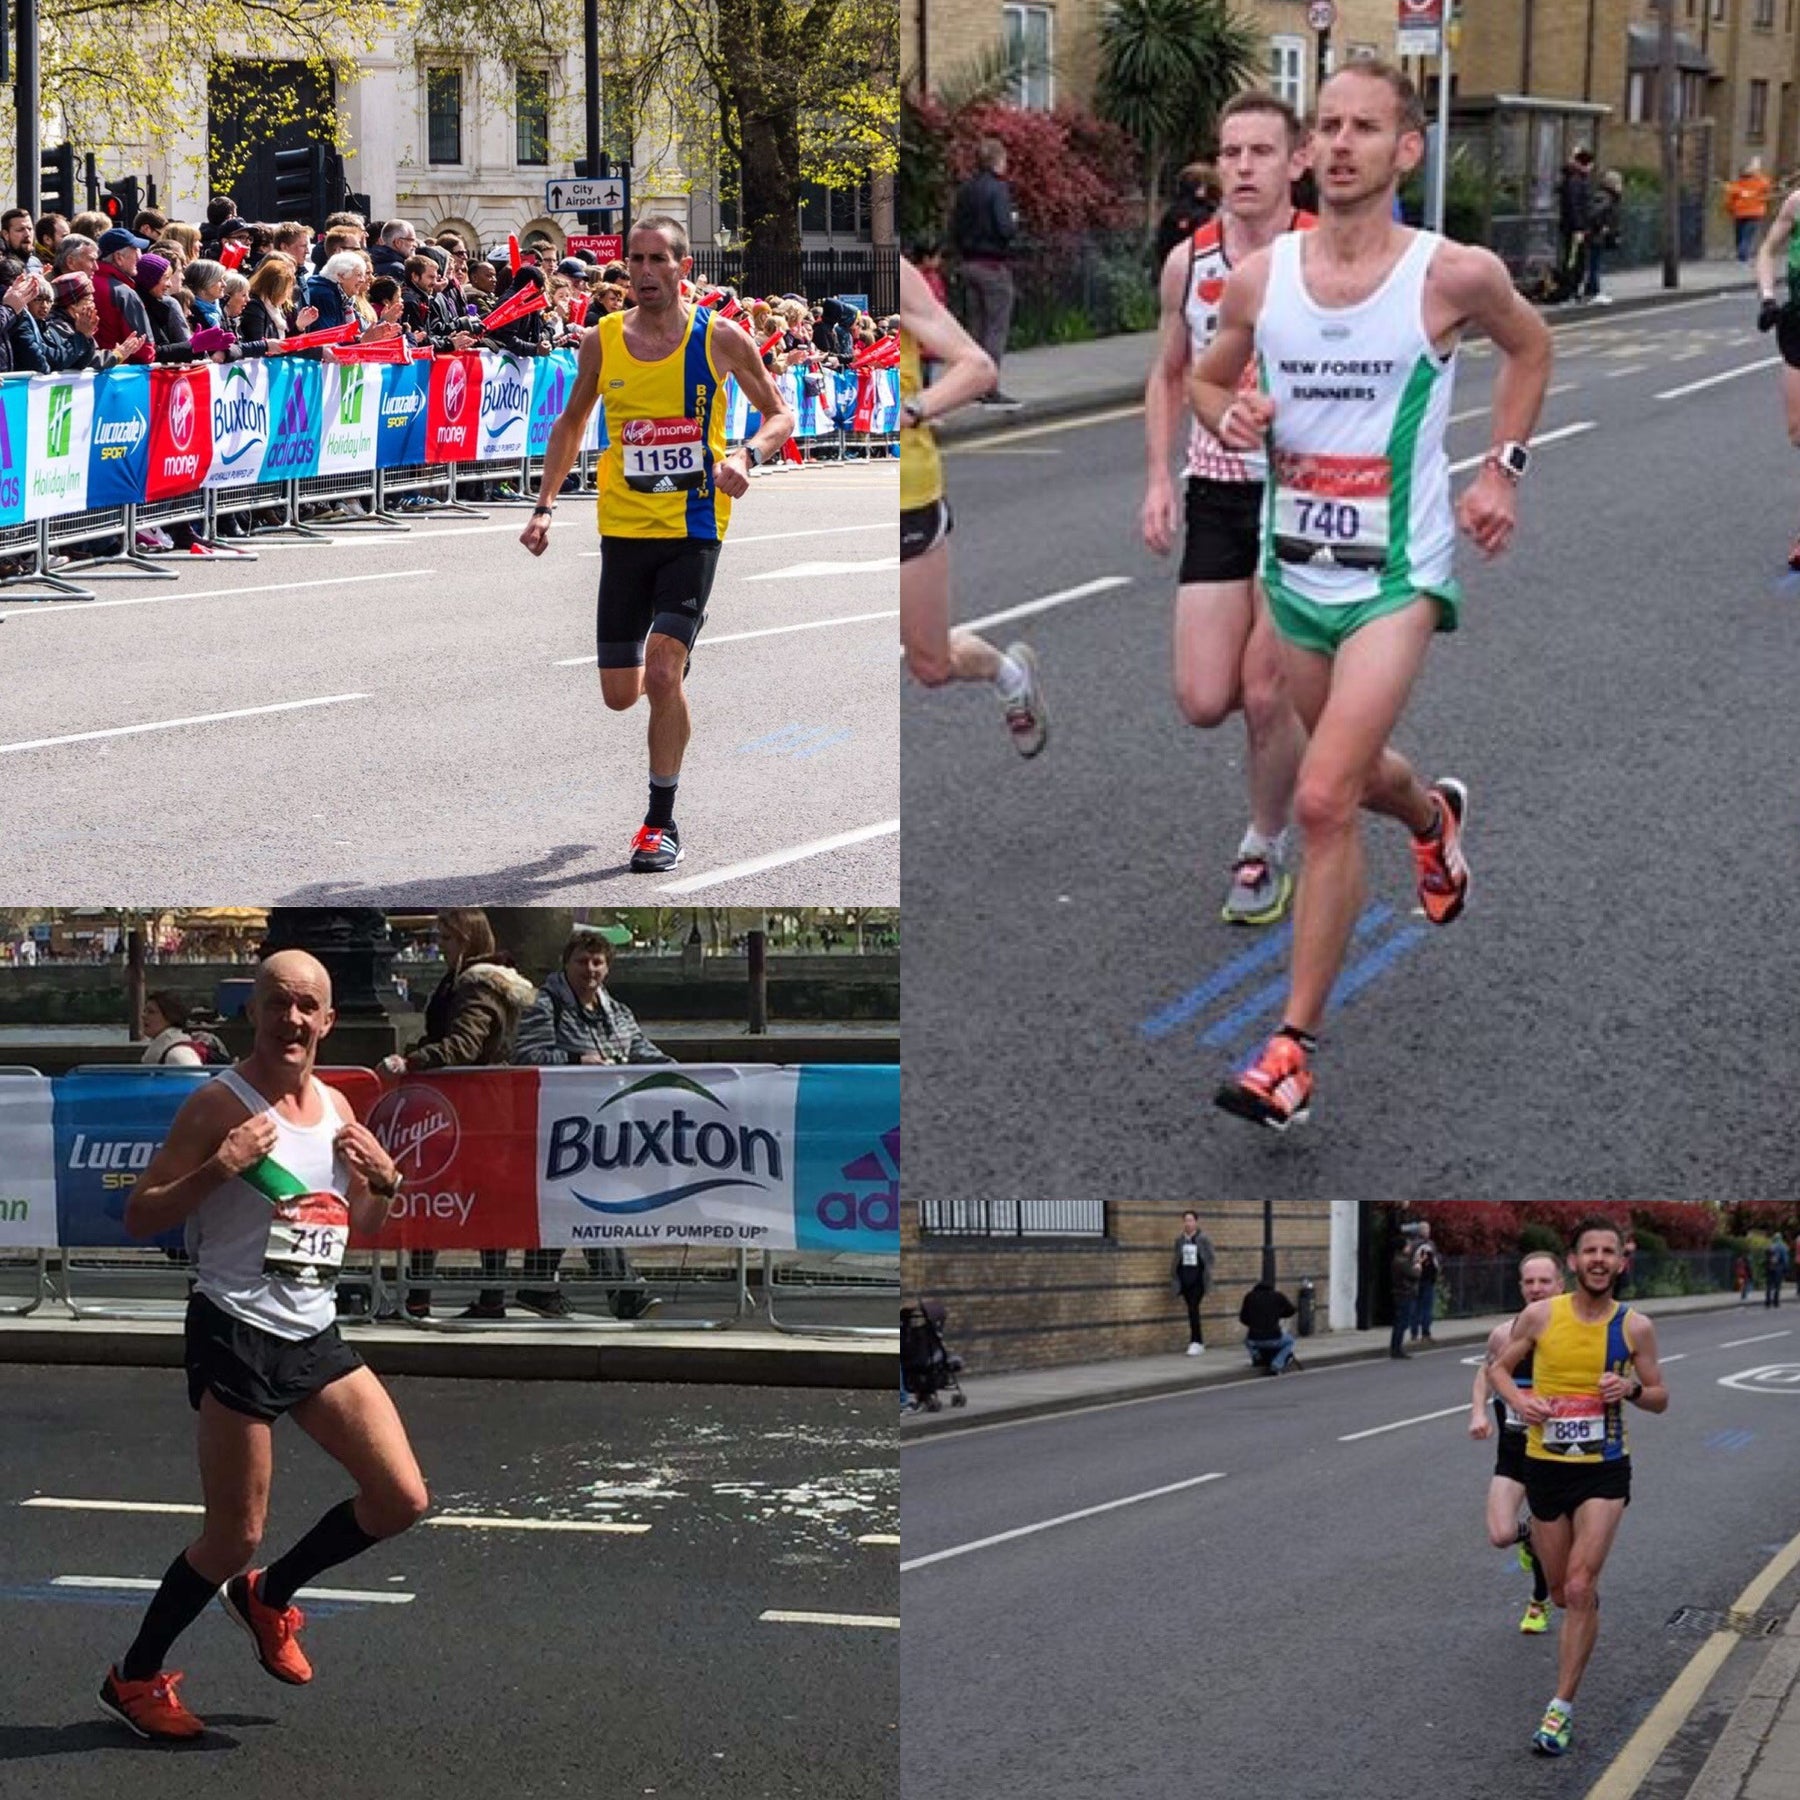 Impressive Running from the XMiles Team & Ambassadors @londonmarathon